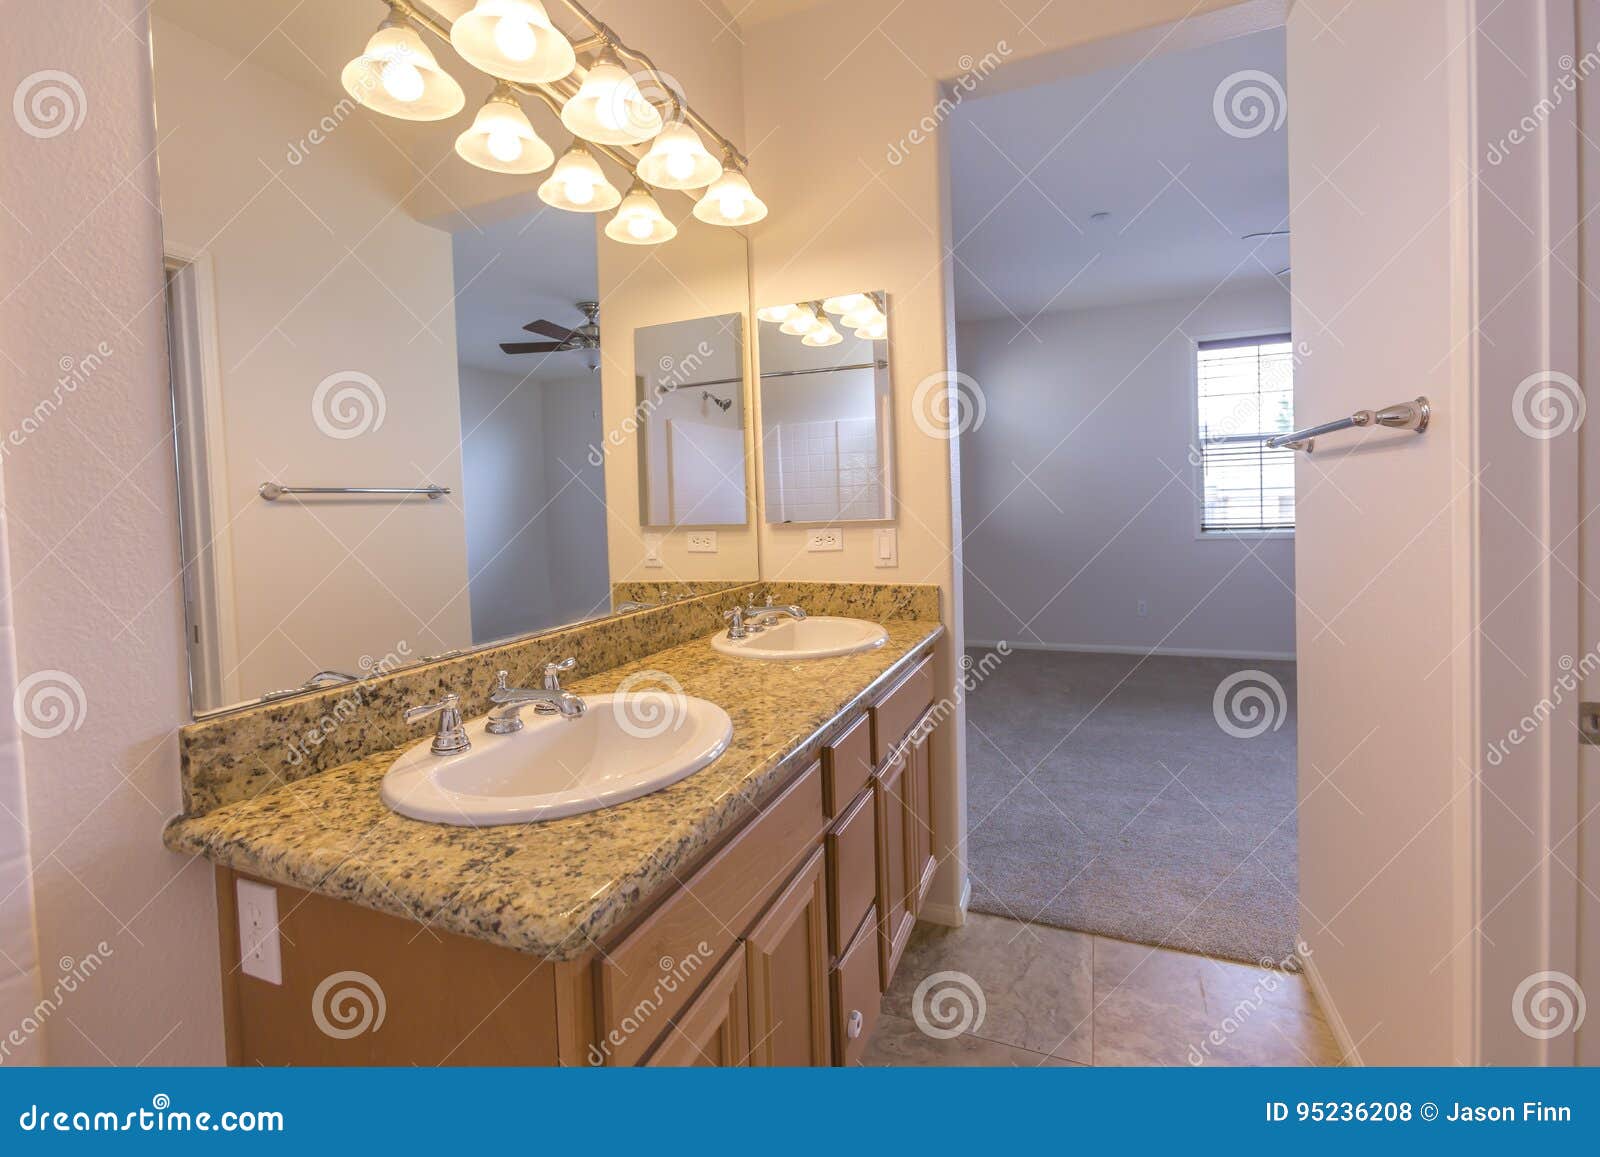 Bright Apartment Master Bedroom Bathroom With Granite